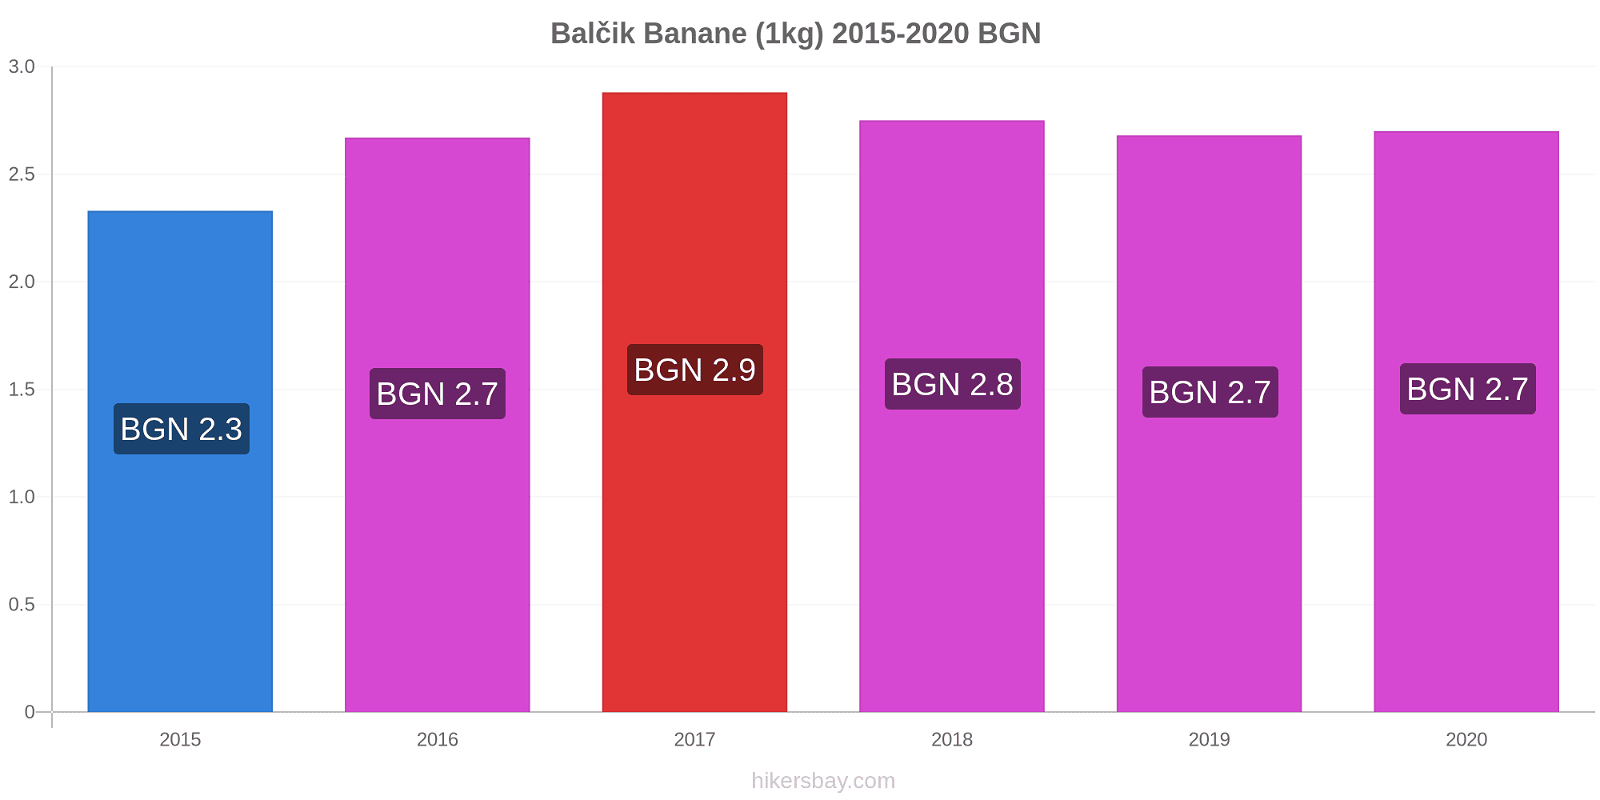 Balčik variazioni di prezzo Banana (1kg) hikersbay.com